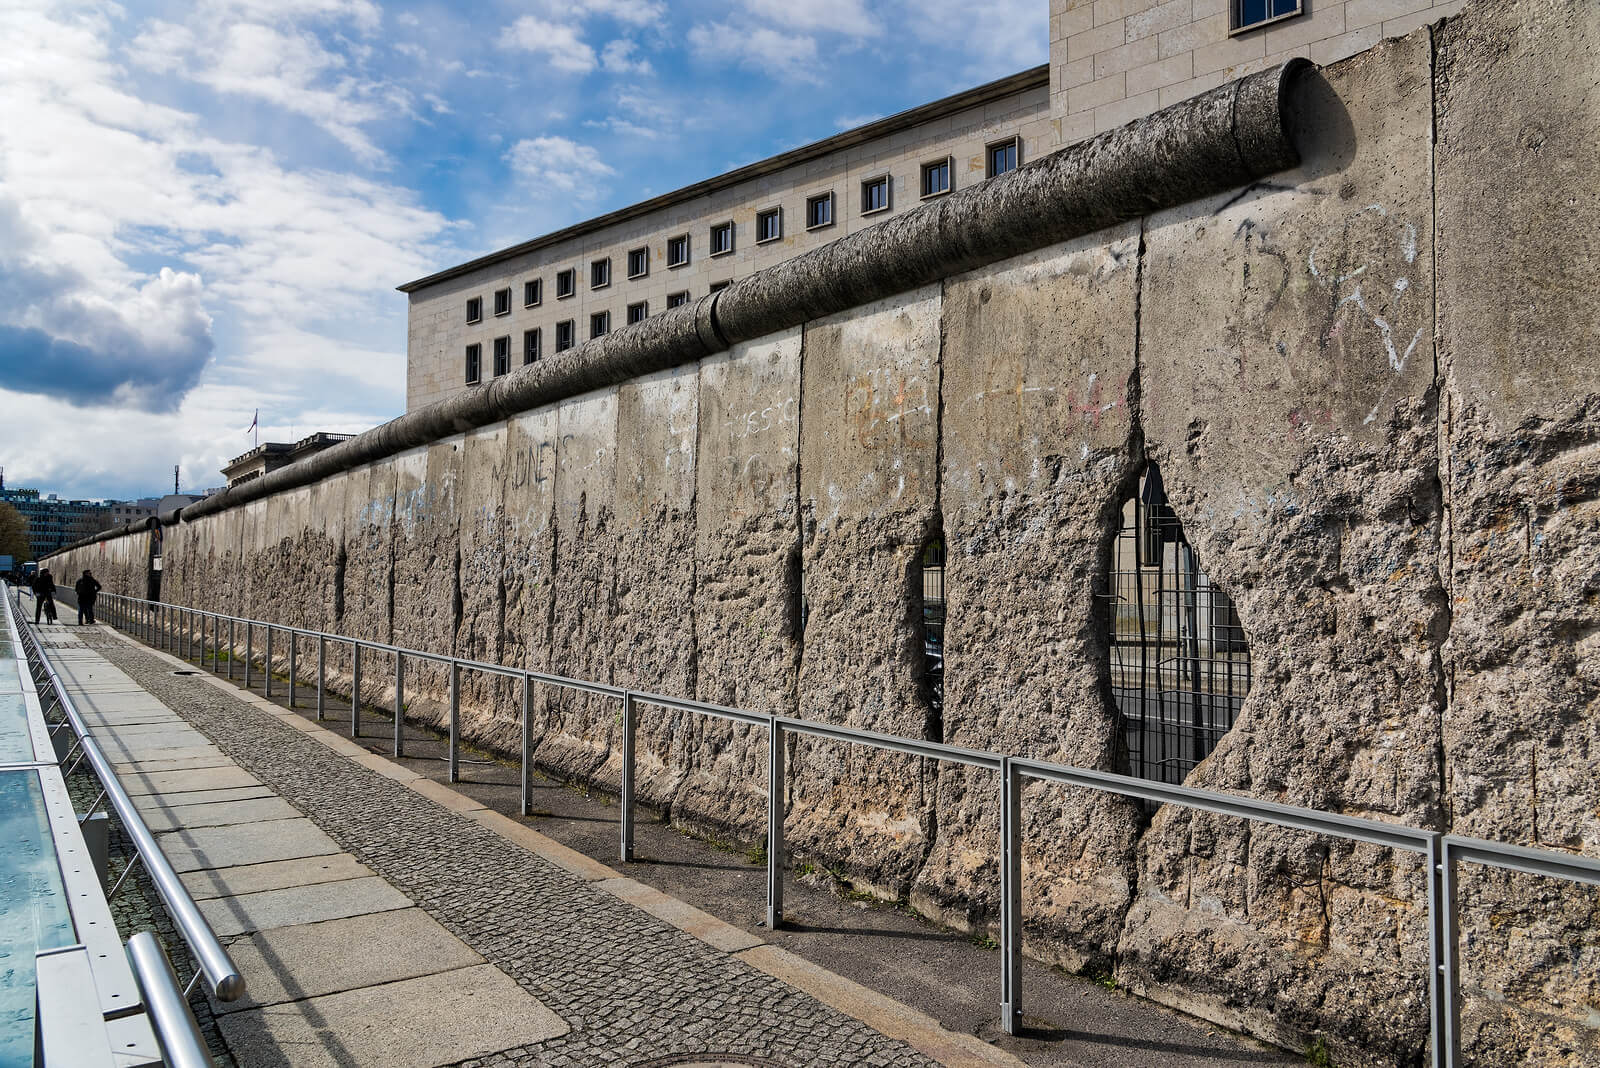 essay on berlin wall